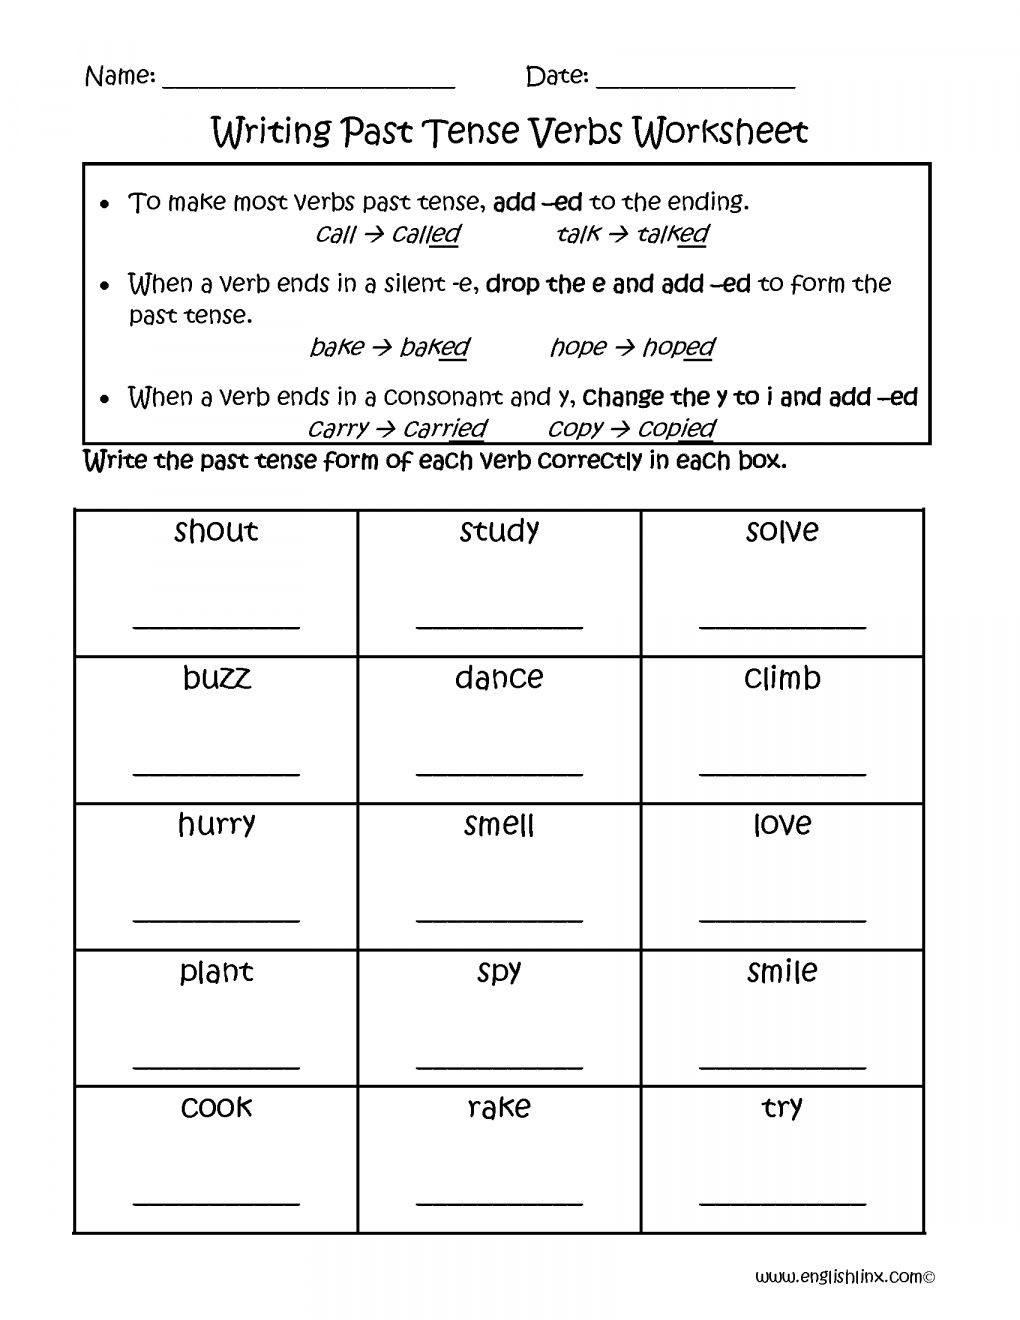 Verb Tense Worksheets 2nd Grade 15 Past Tense Verbs Worksheets 2nd Grade